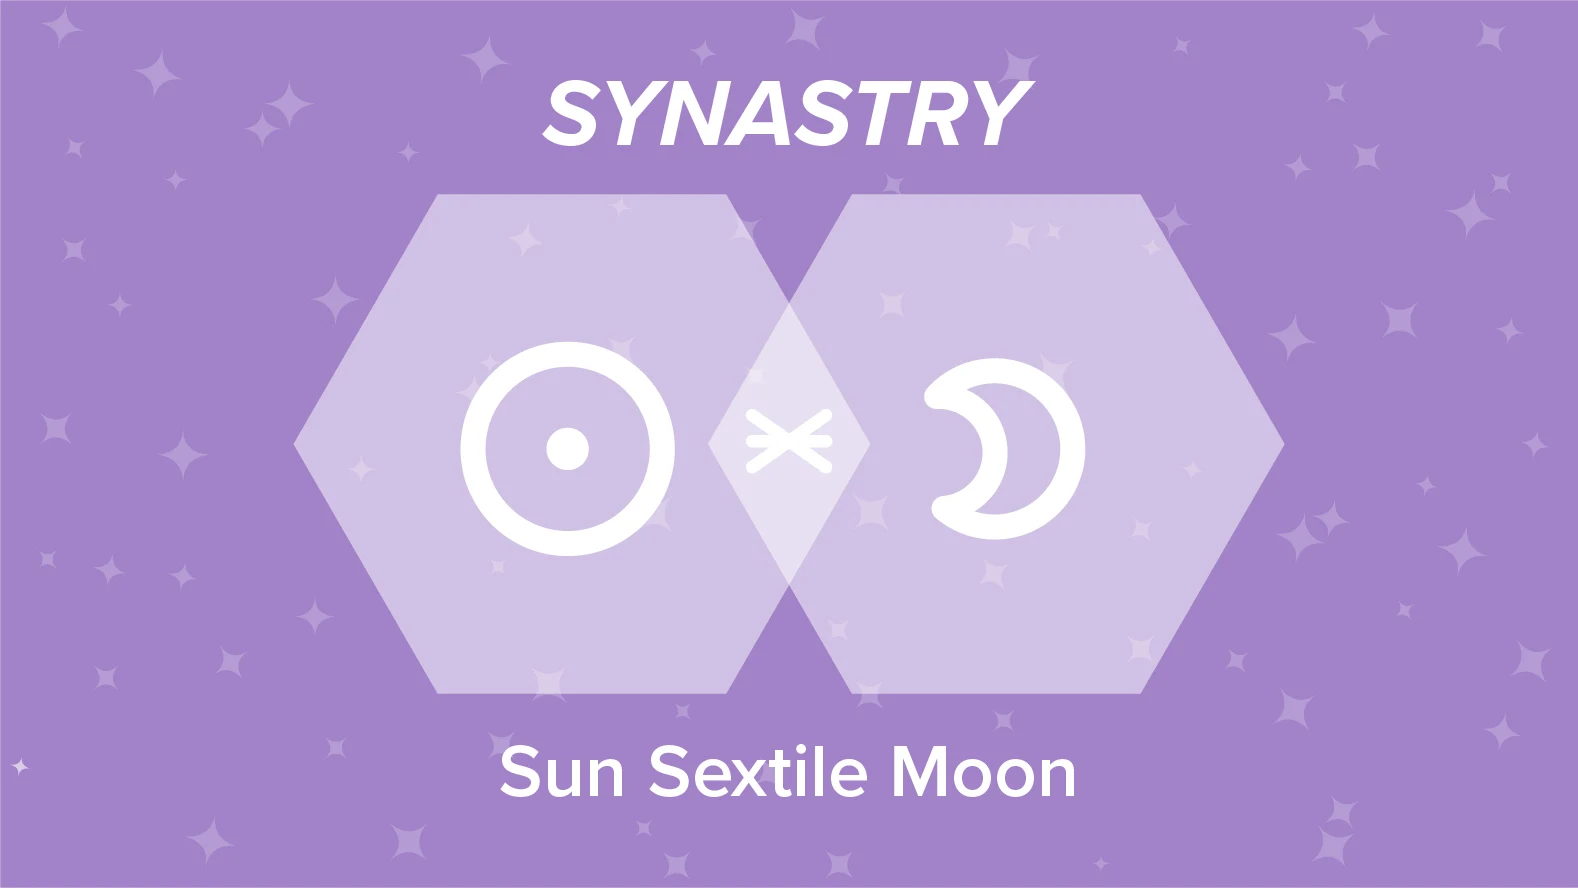 Sun Sextile Moon Synastry